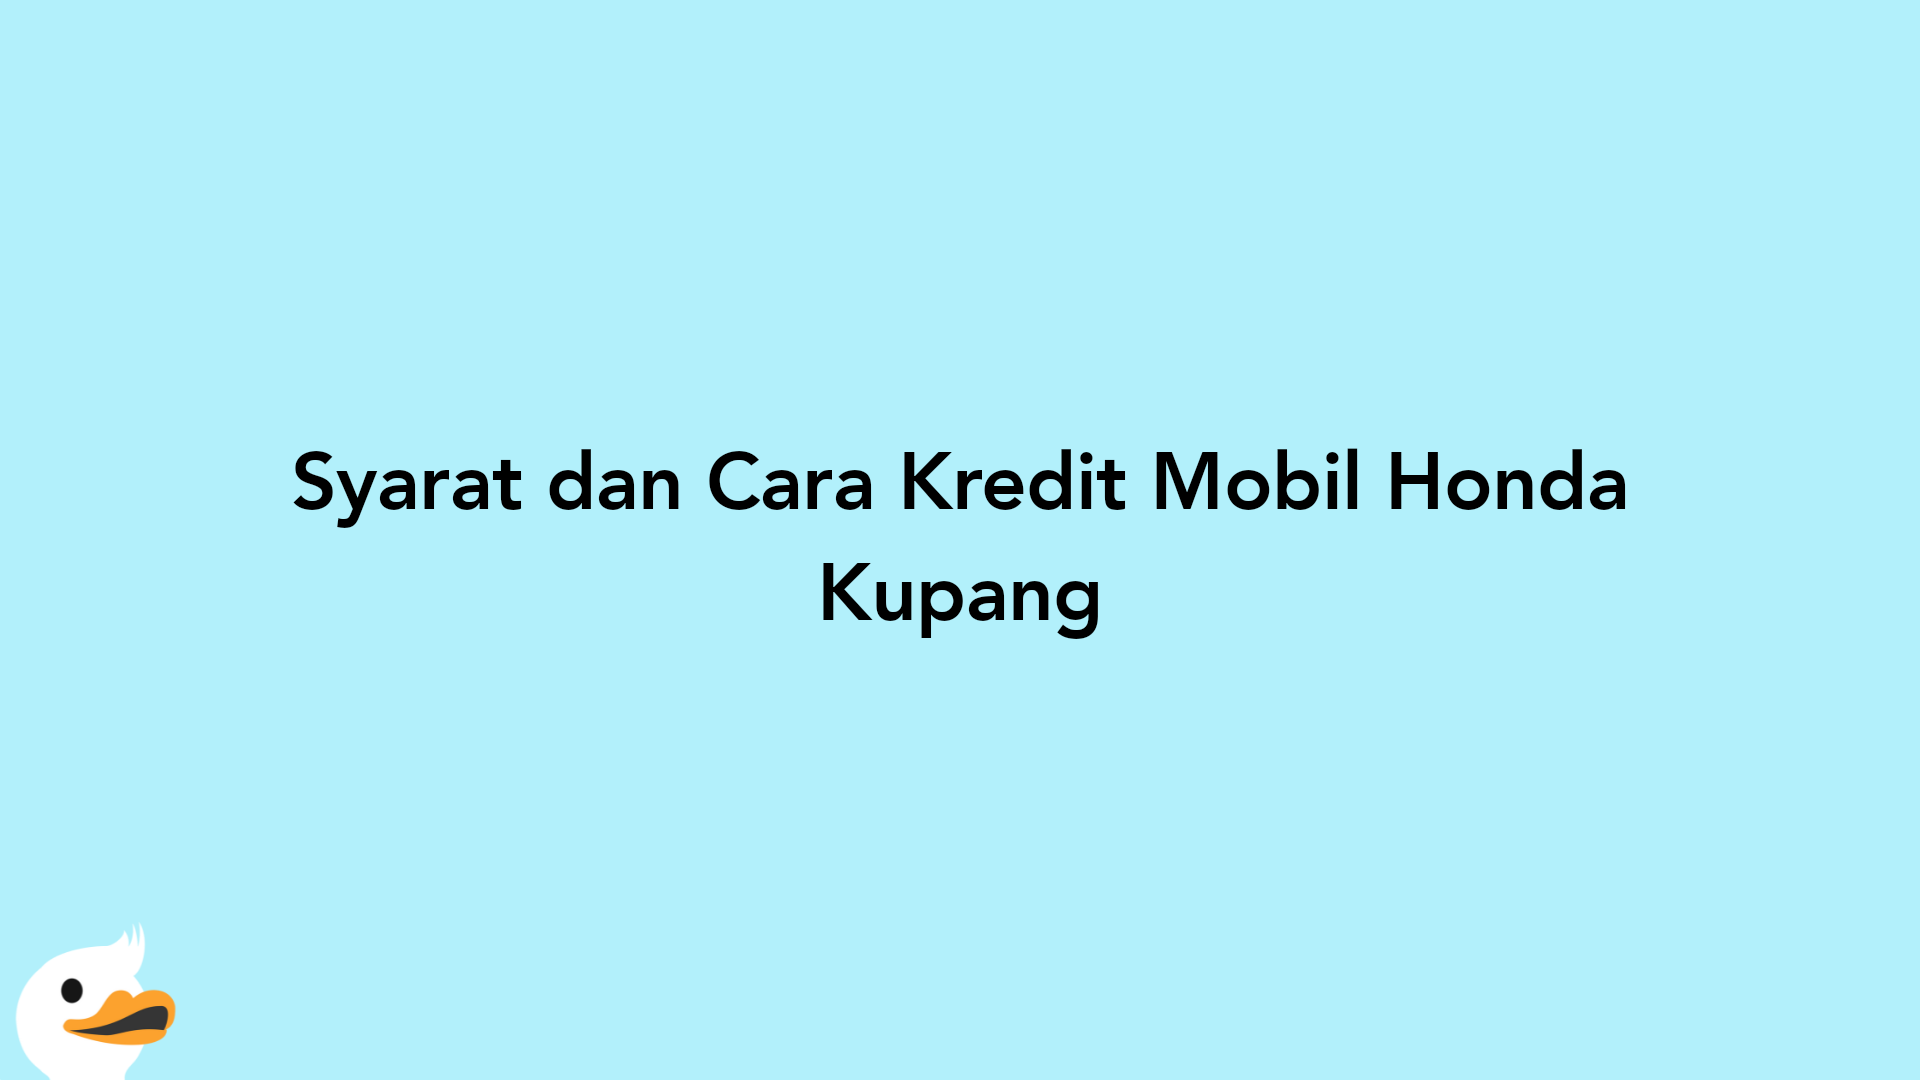 Syarat dan Cara Kredit Mobil Honda Kupang